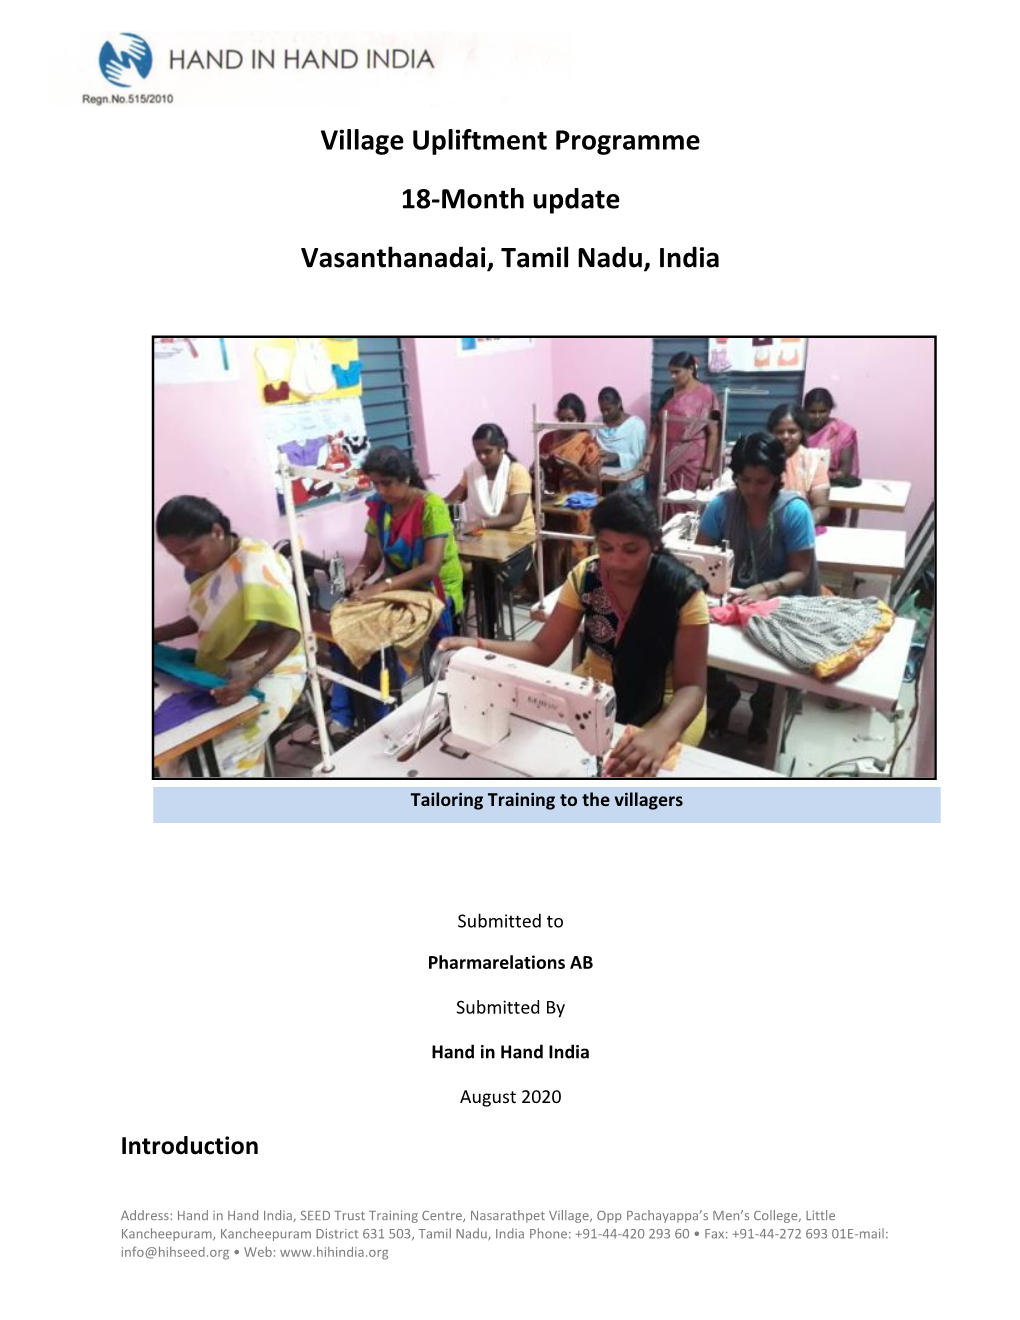 Village Upliftment Programme 18-Month Update Vasanthanadai, Tamil Nadu, India